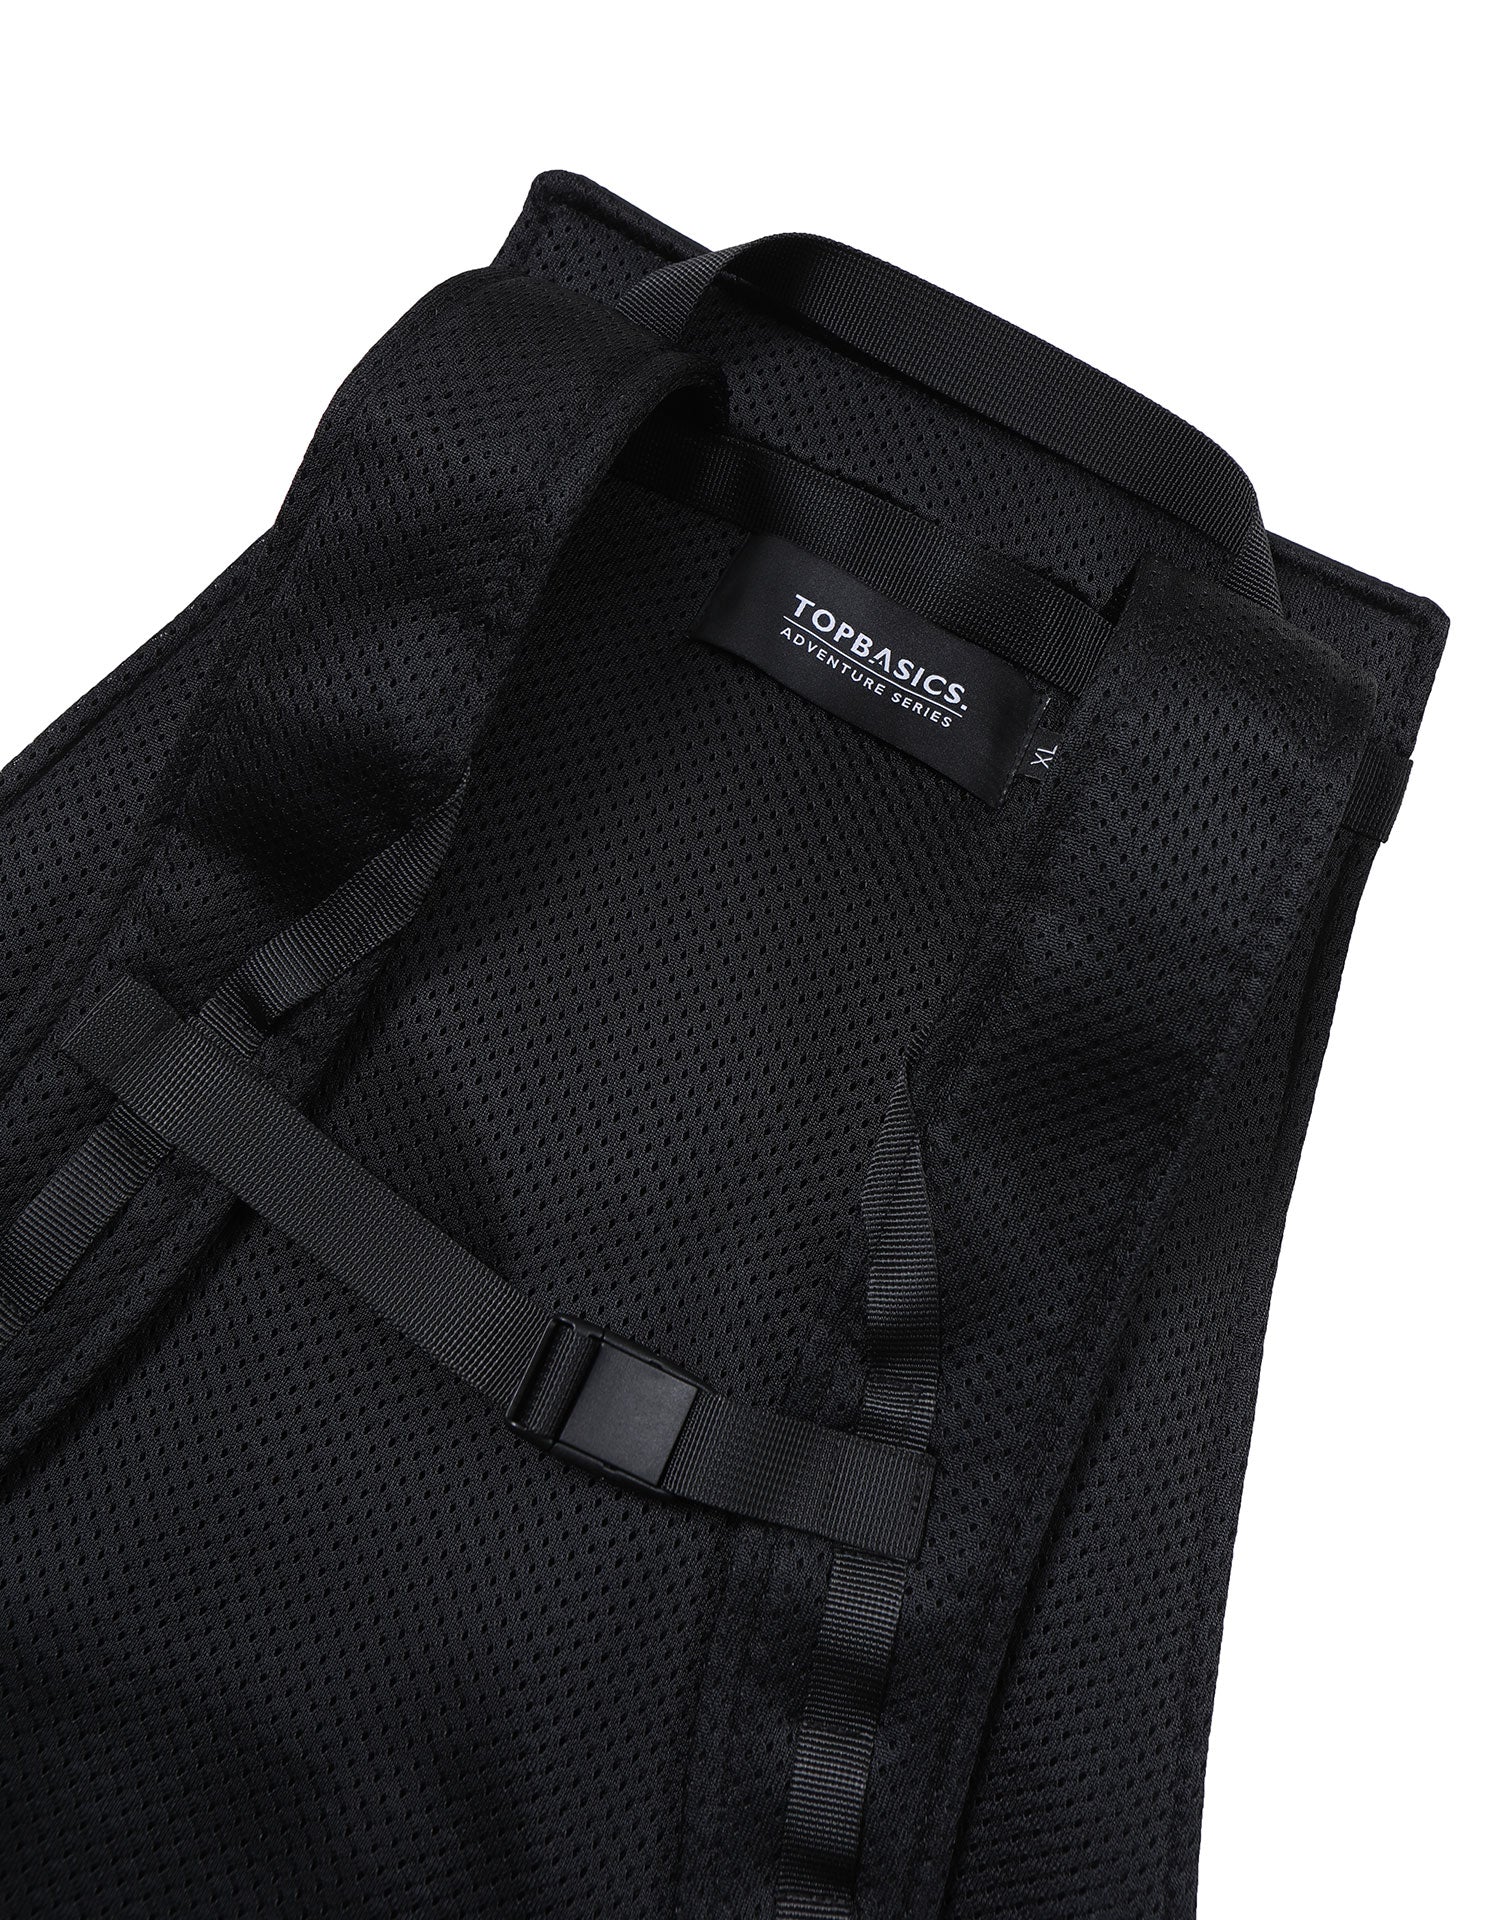 TopBasics Adventure Series Strap Pockets Vest